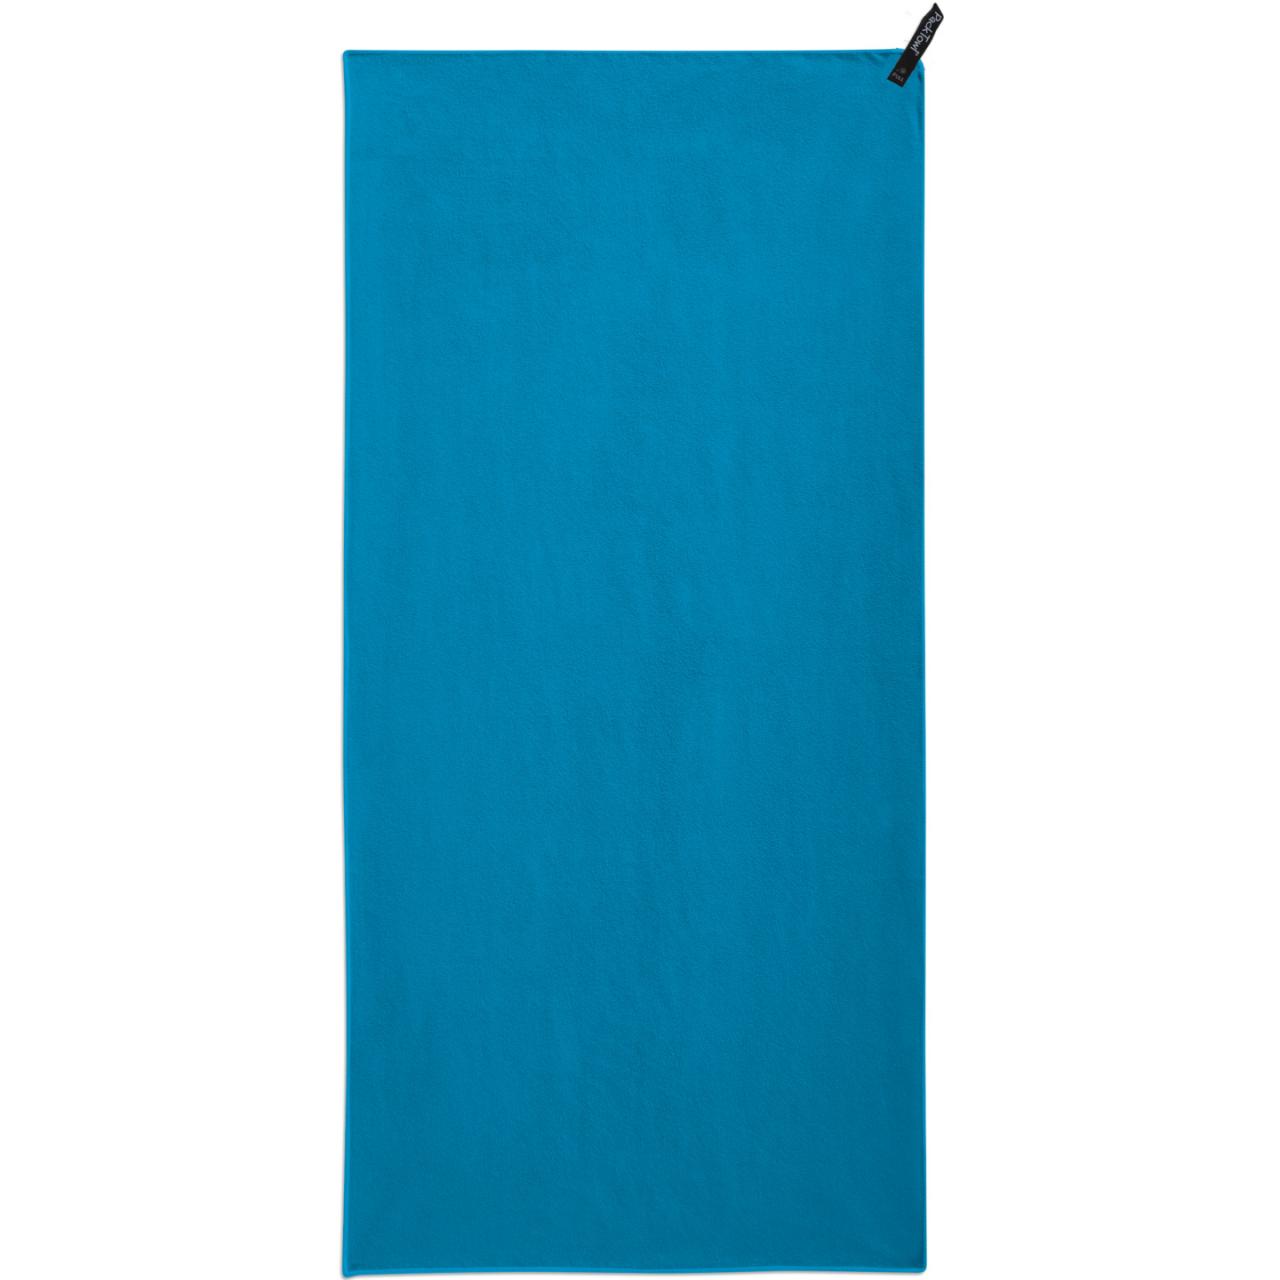 PACKTOWL PERSONAL FACE Lake Blue ručník 25x35cm modrý